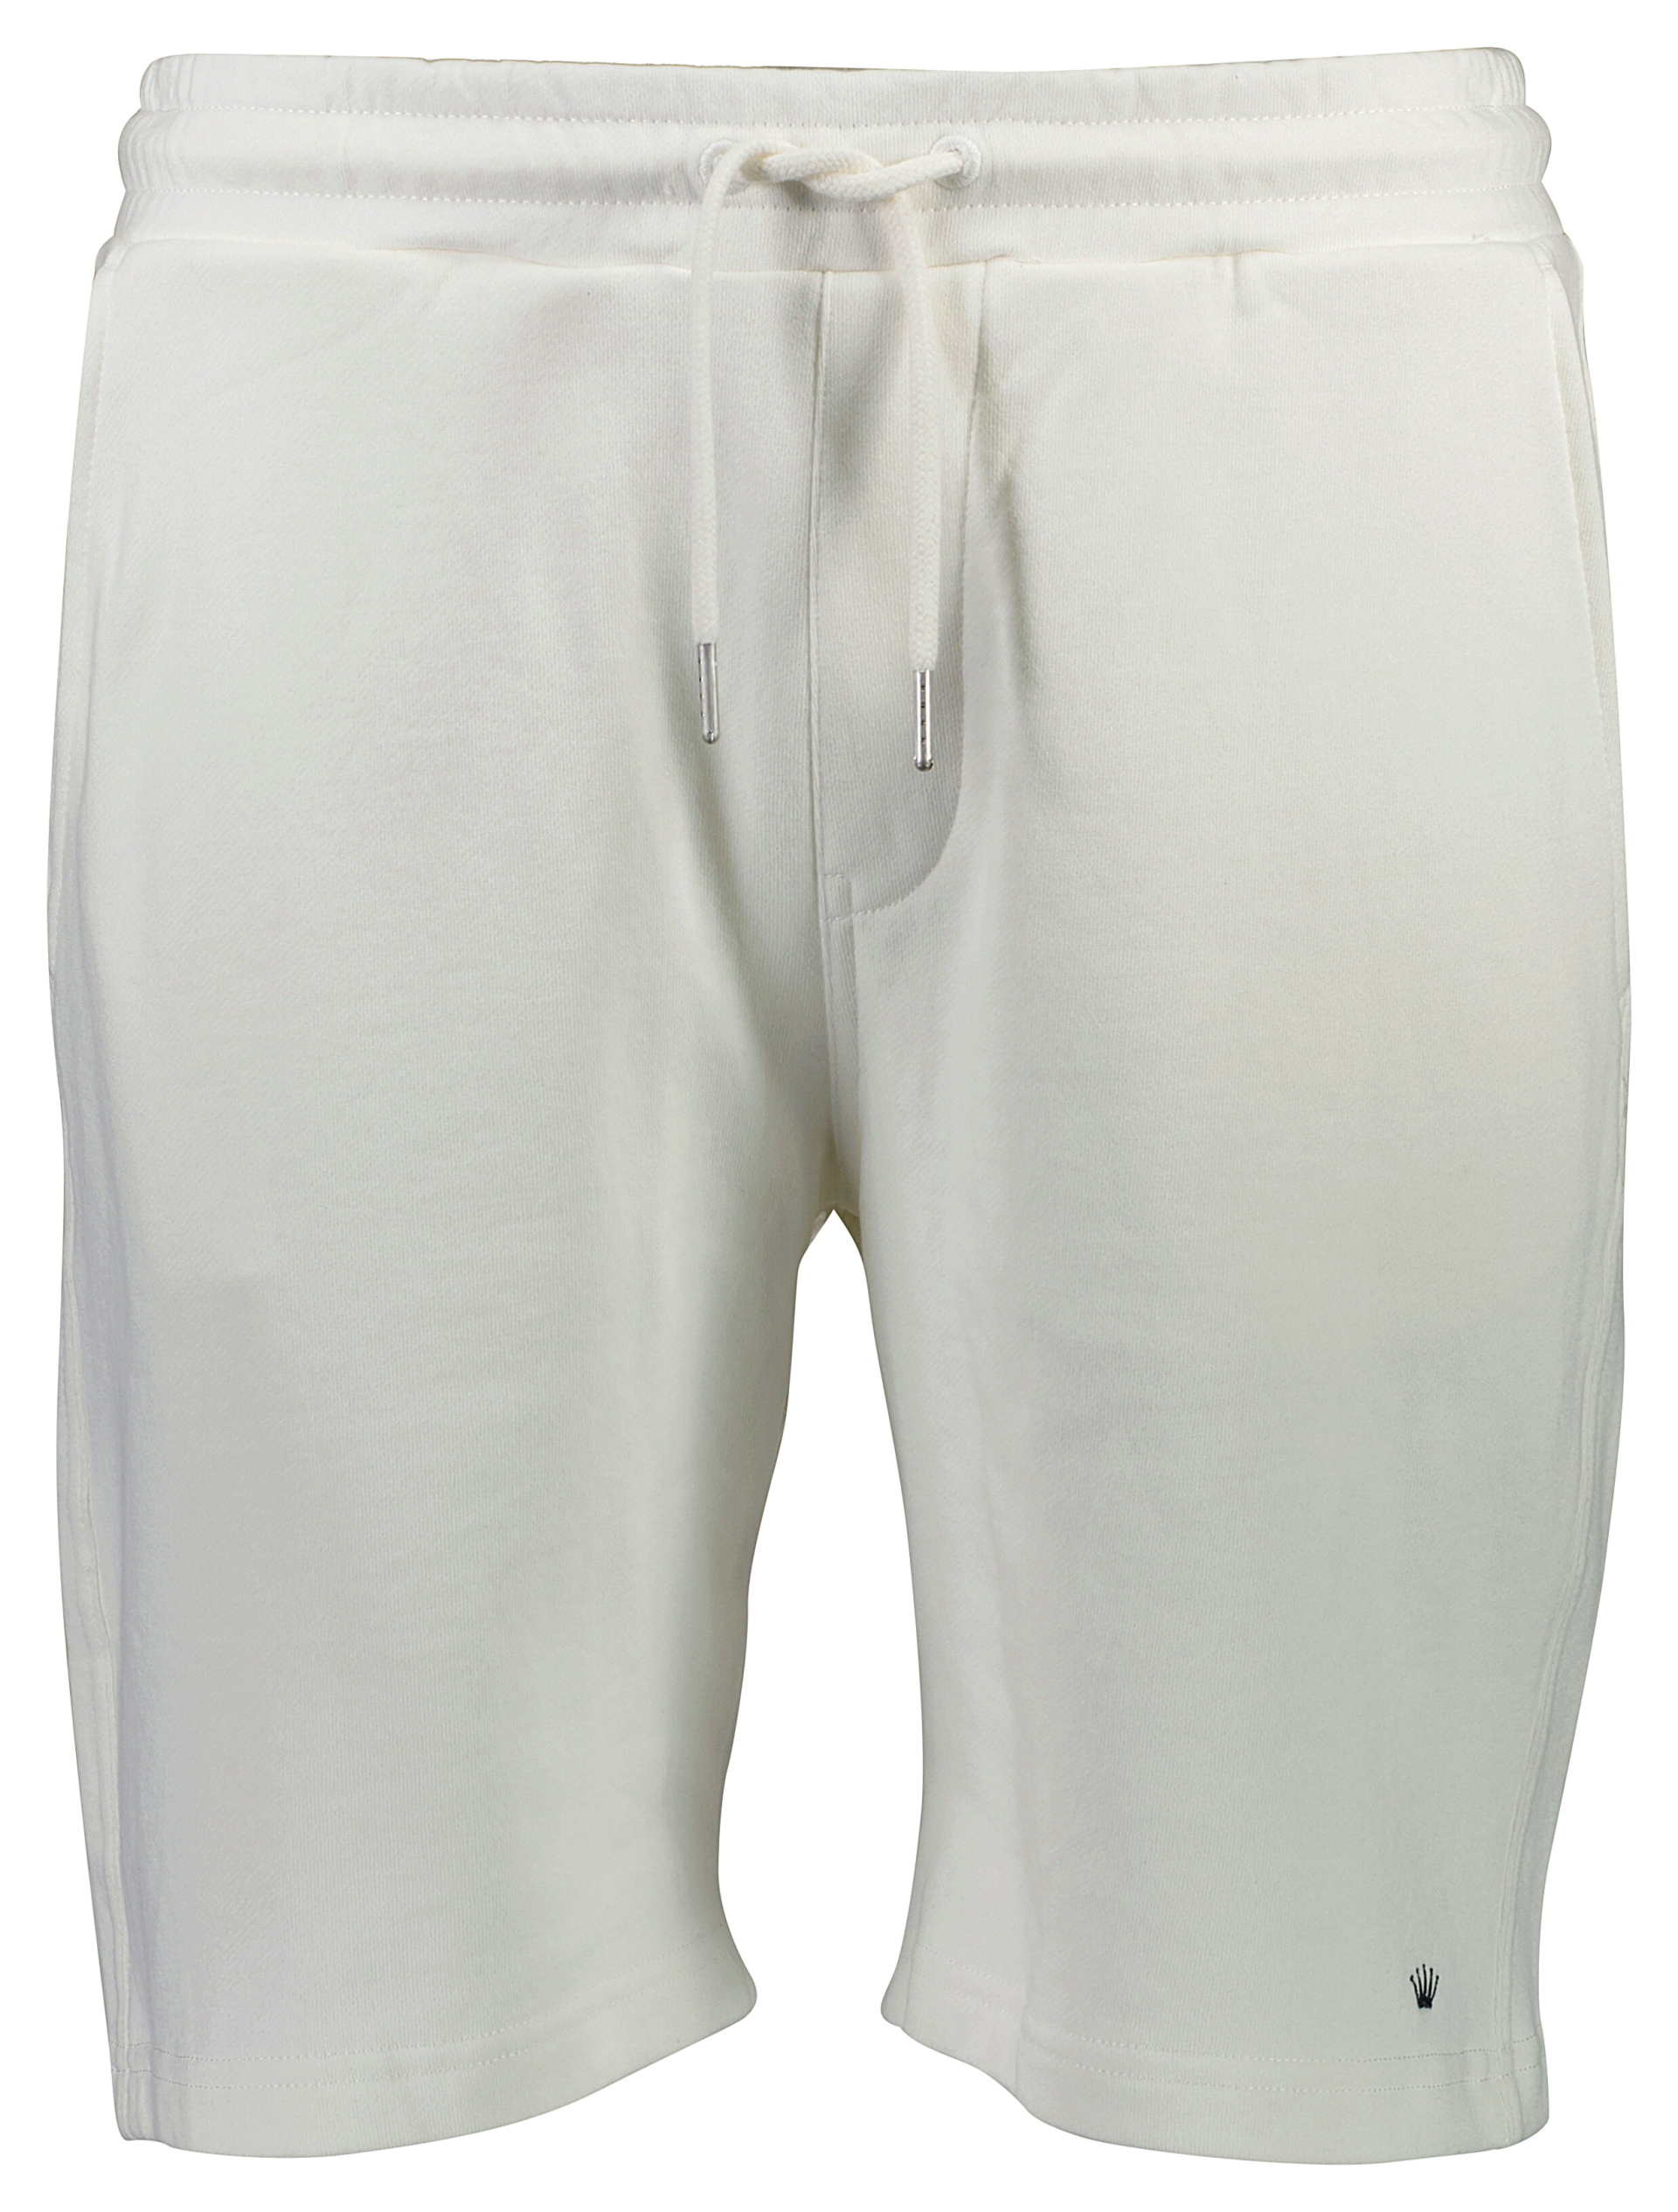 Junk de Luxe Casual shorts hvid / off white